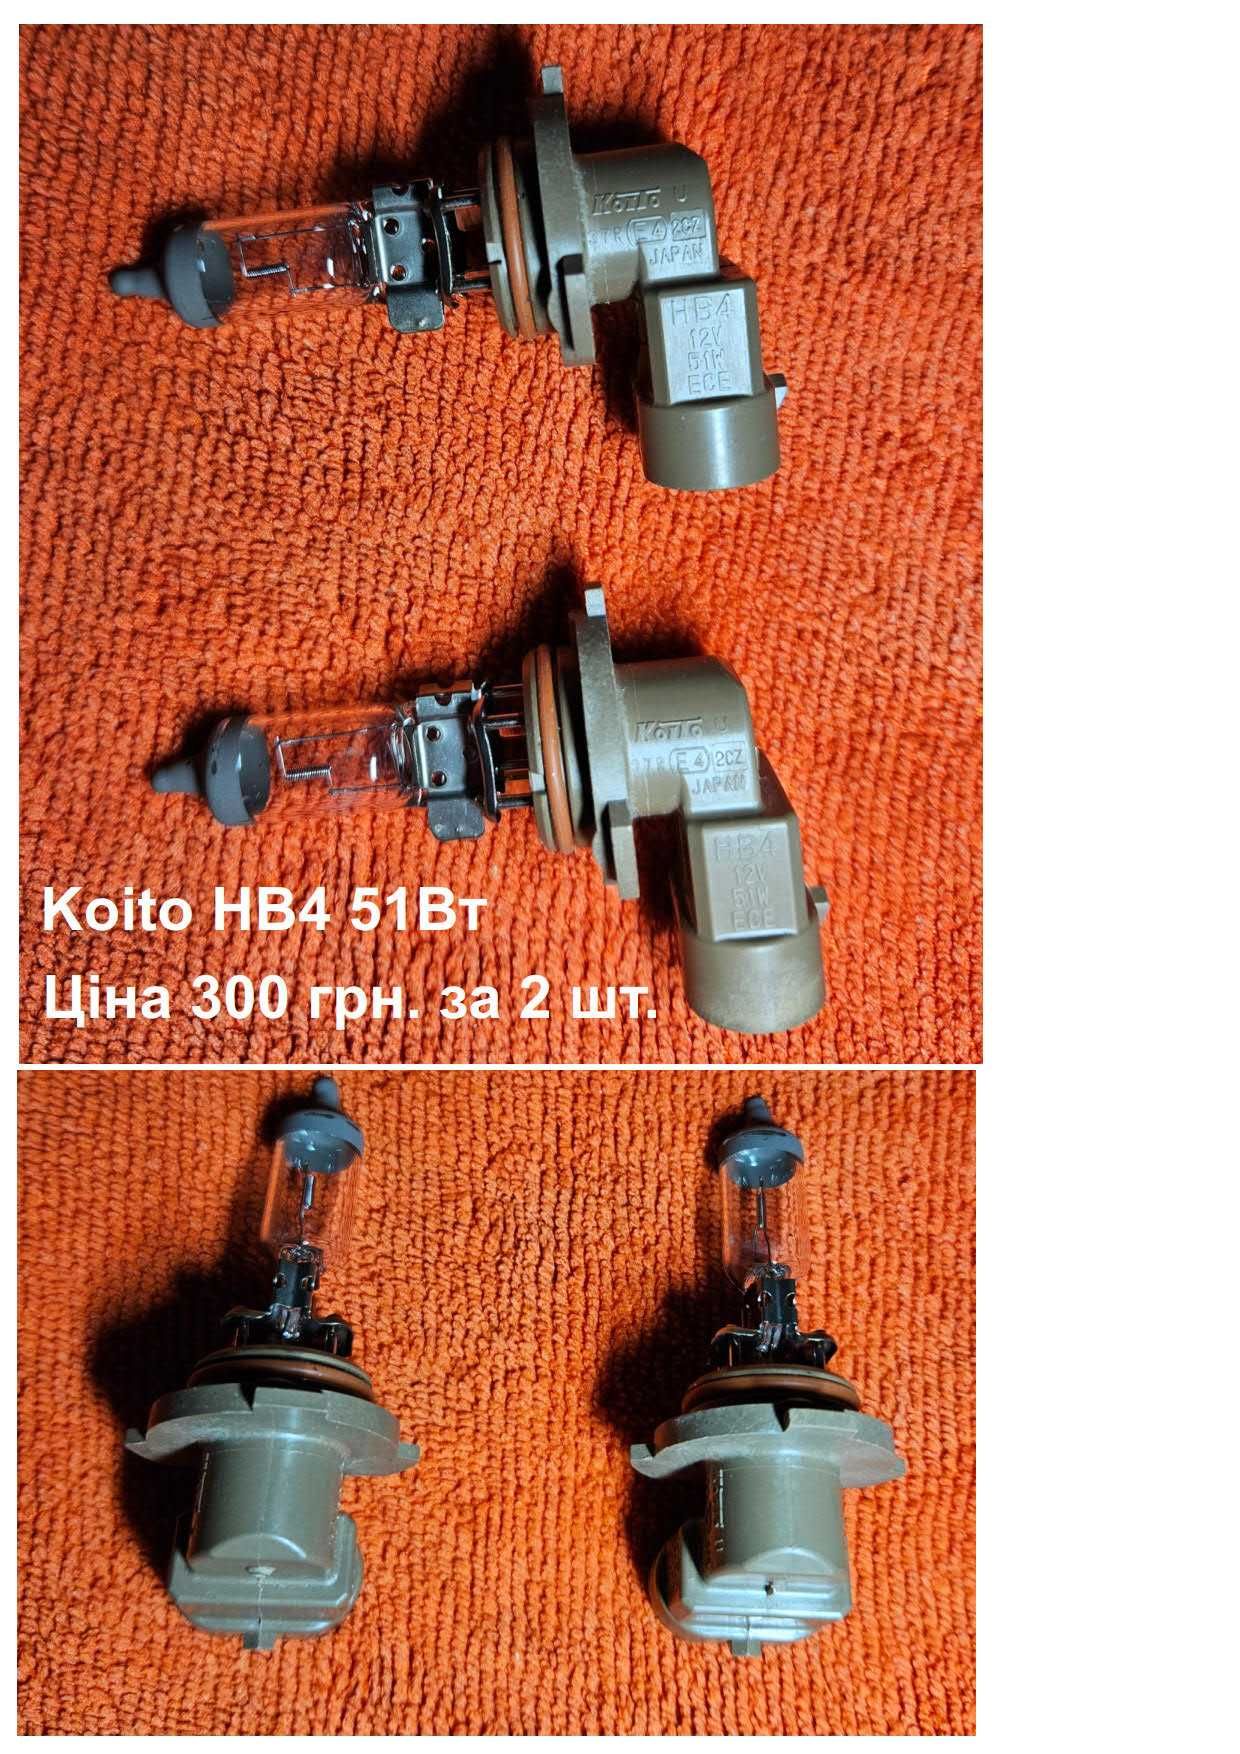 Лампи HB3\HB4 - Philips, Koito i Sylvania